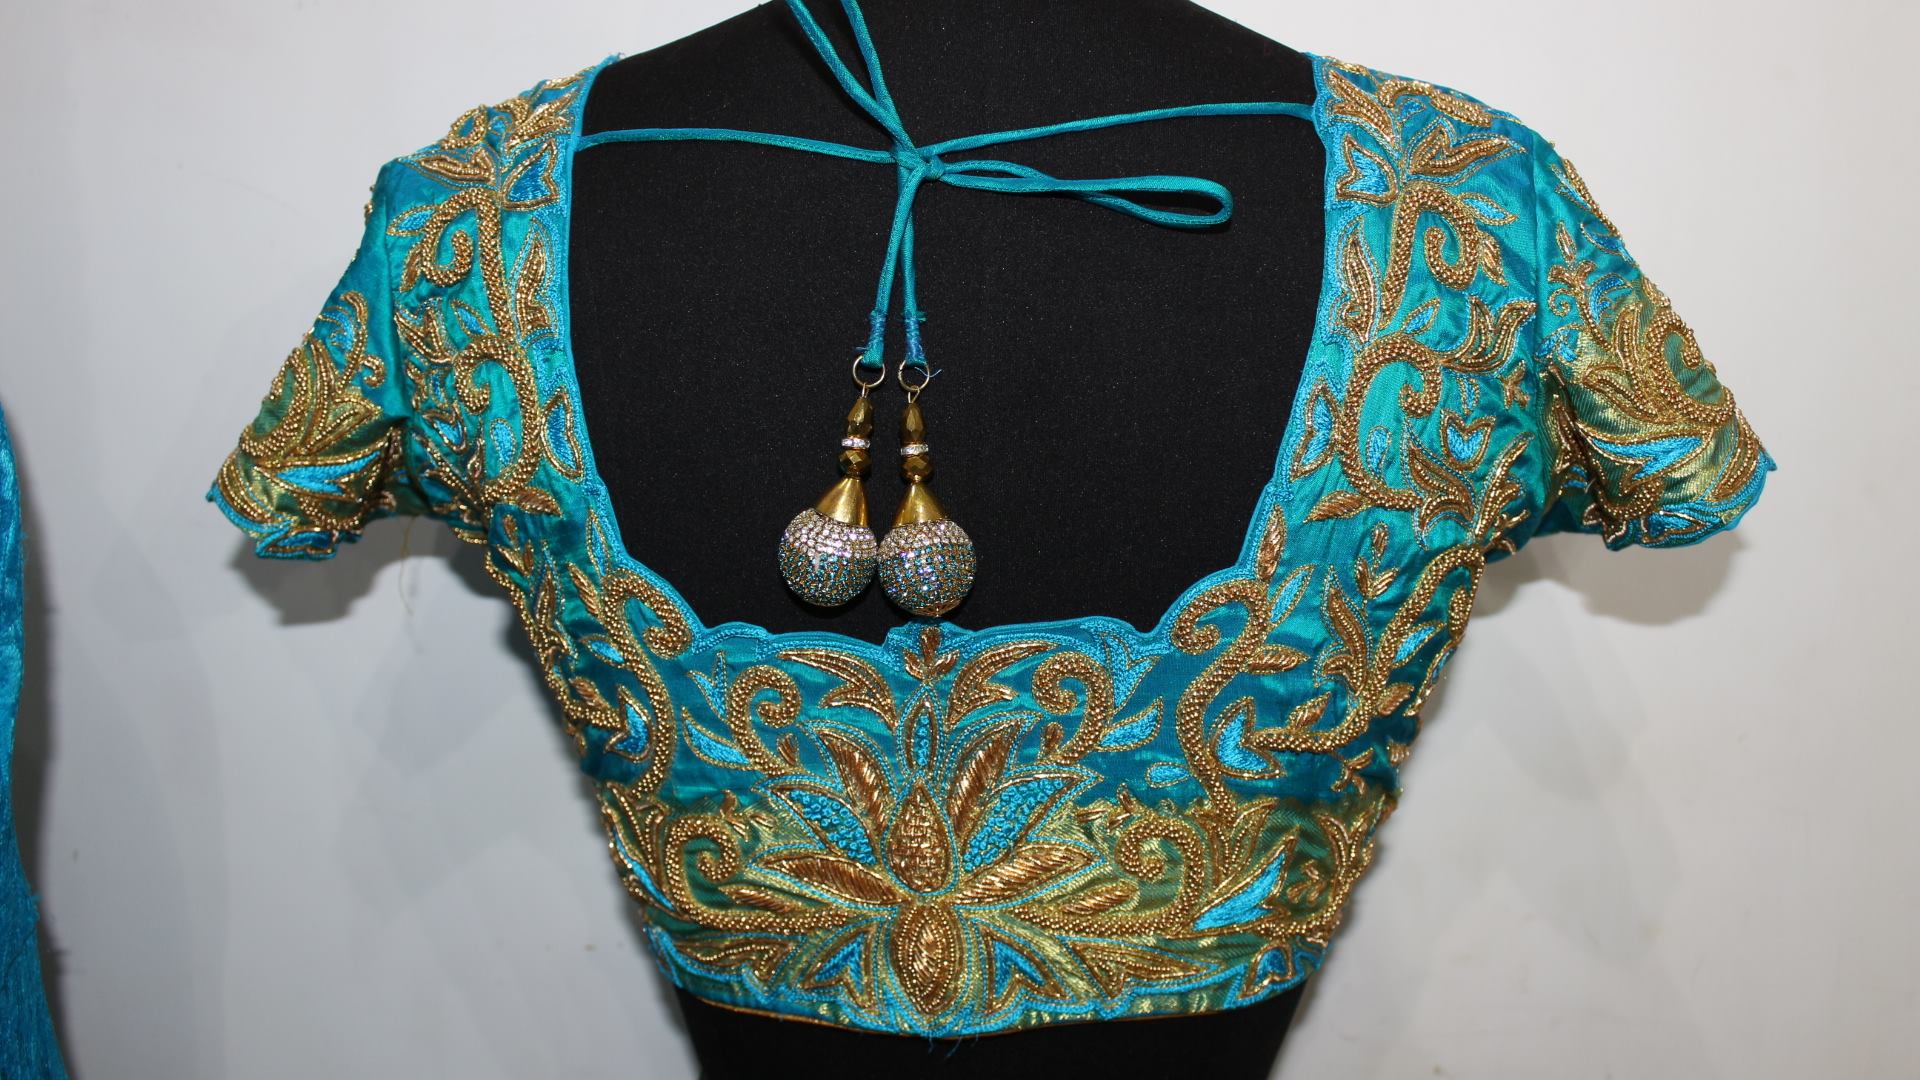  Rosado blouse designs-img2